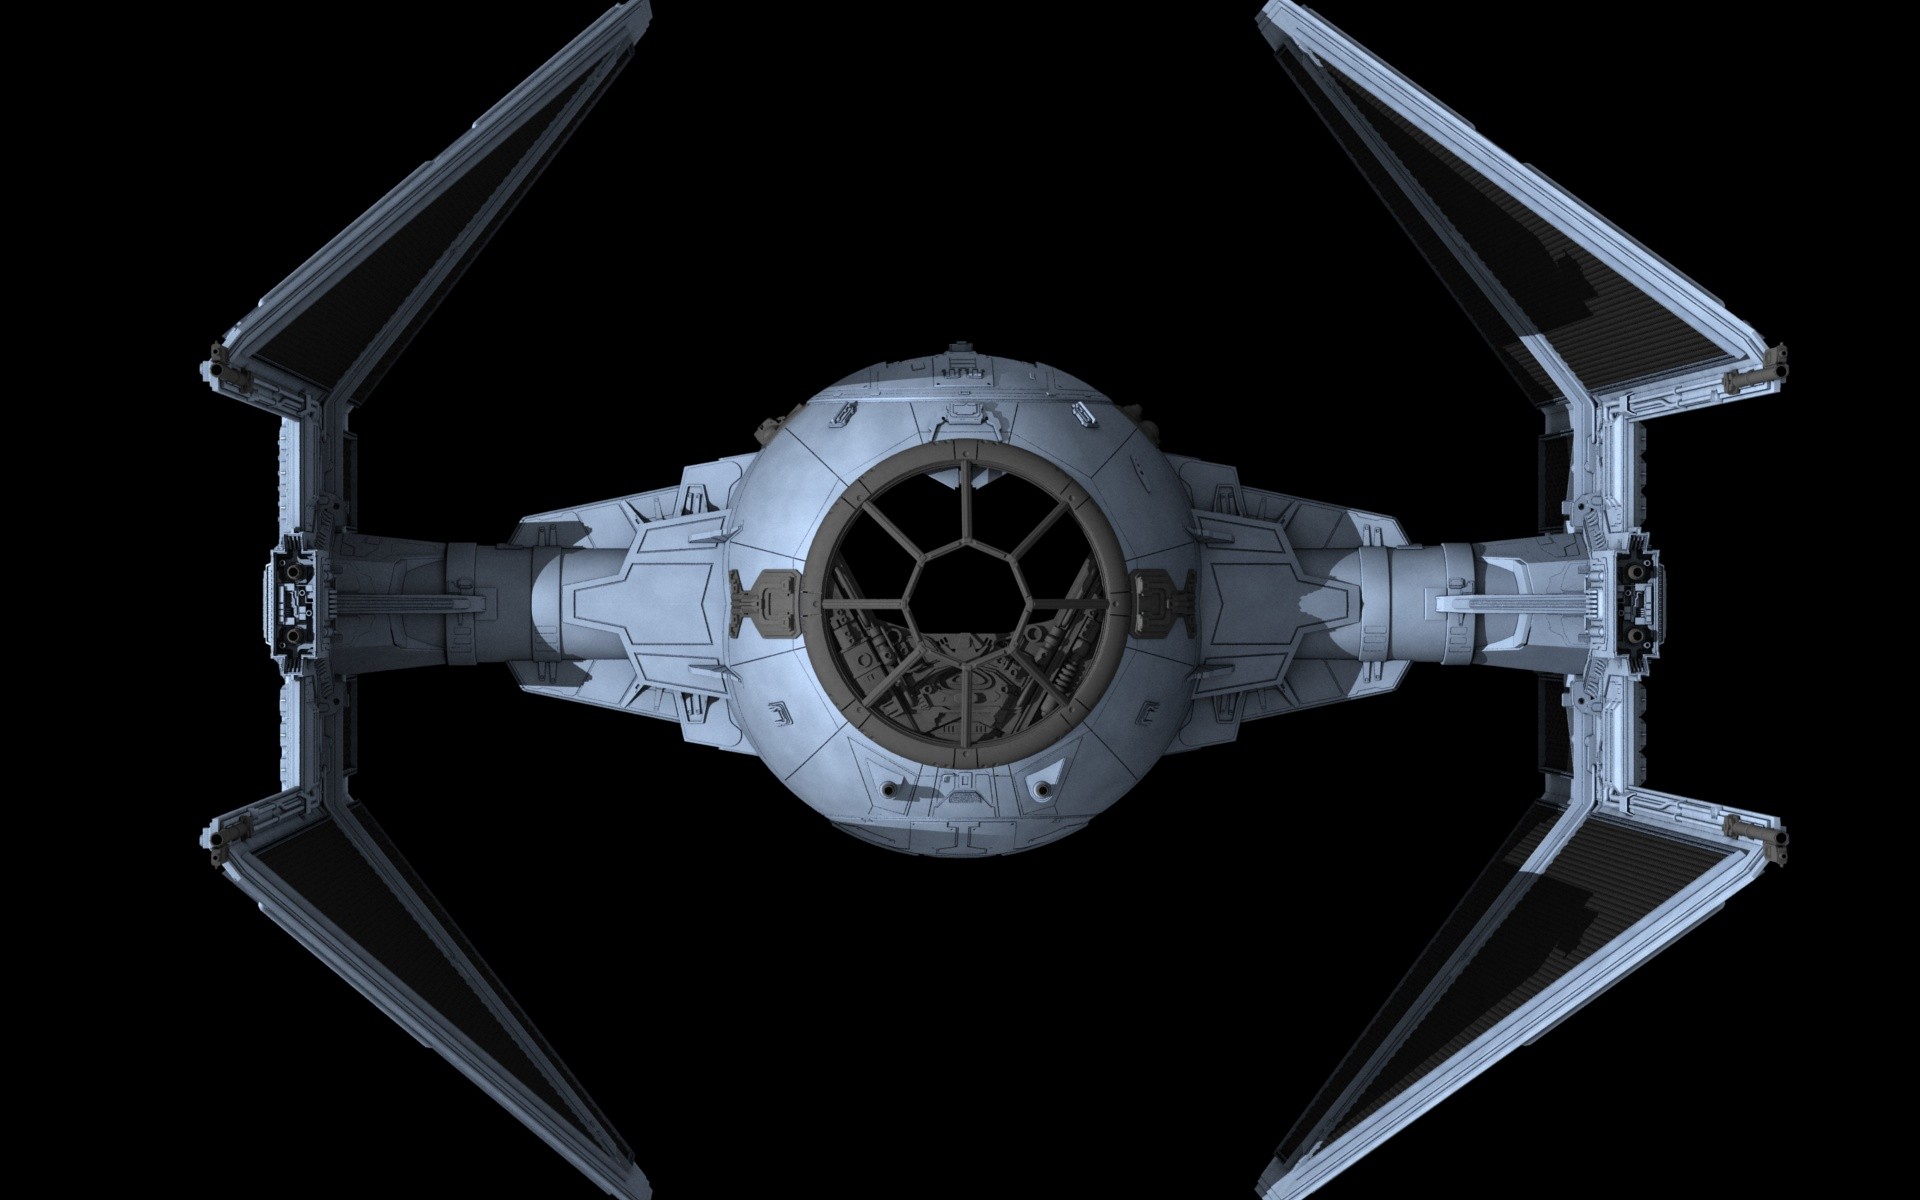 General 1920x1200 Star Wars TIE Interceptor CGI Star Wars Ships science fiction vehicle black background digital art